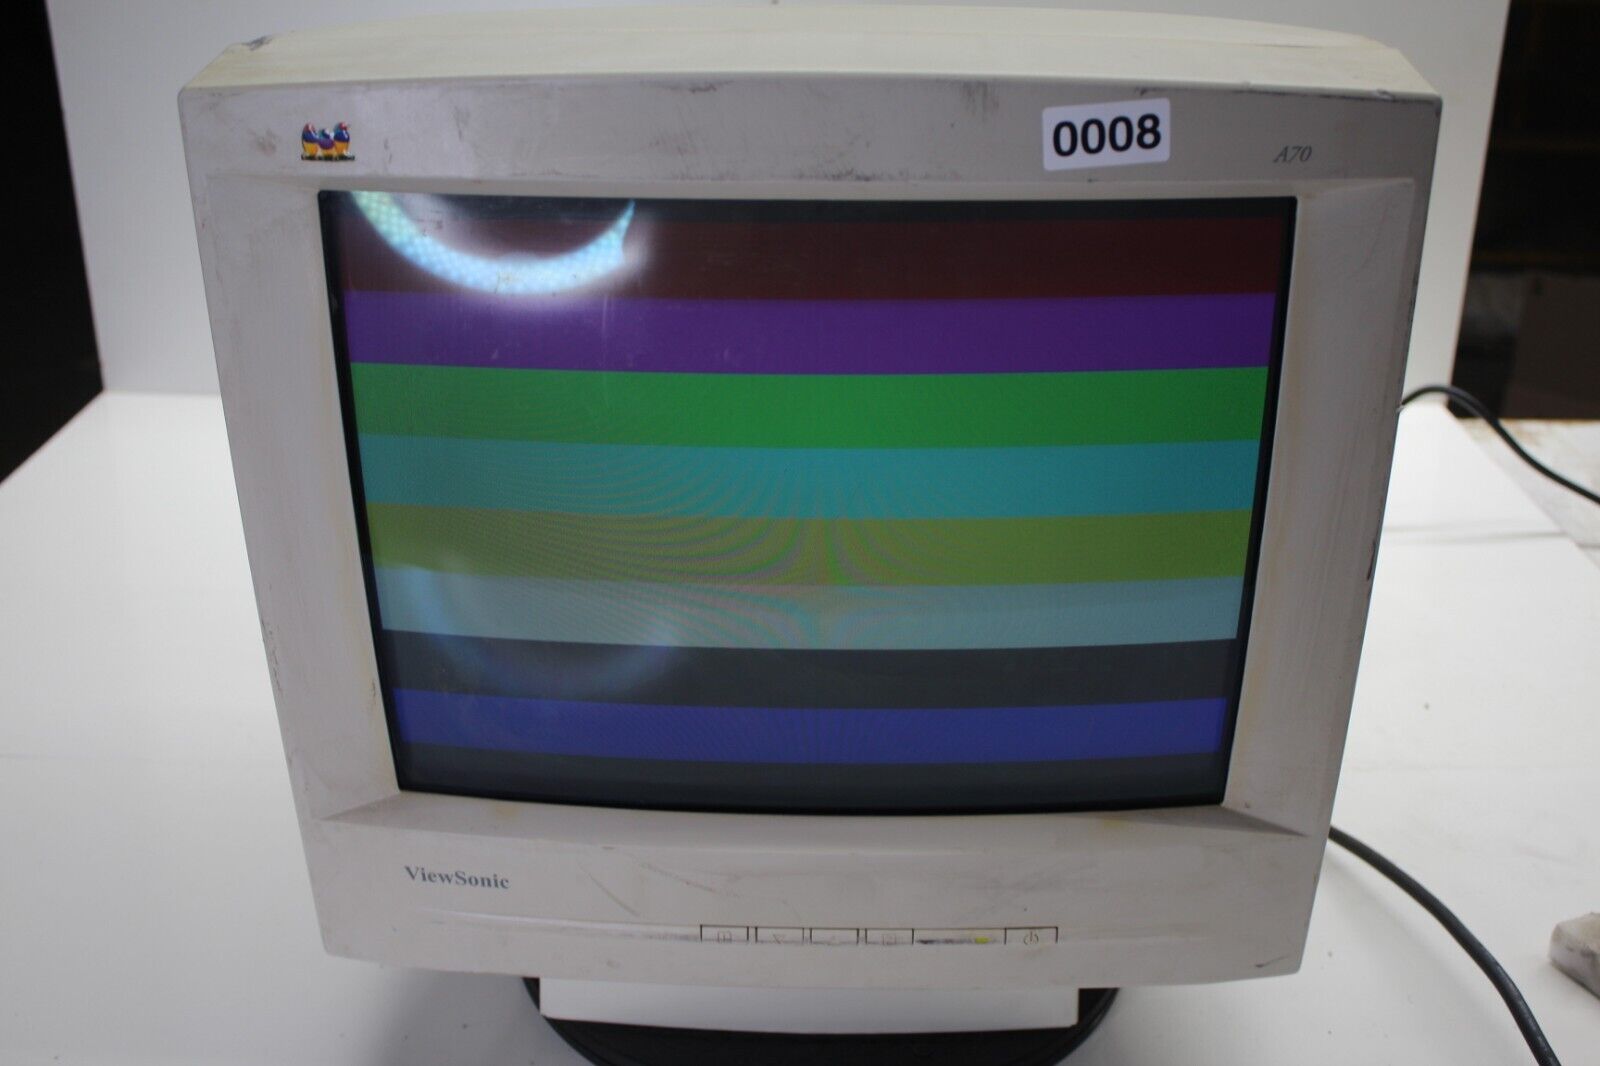 Viewsonic A70 17” SVGA CRT Computer Monitor VCDTS21543-3R 1280x1024